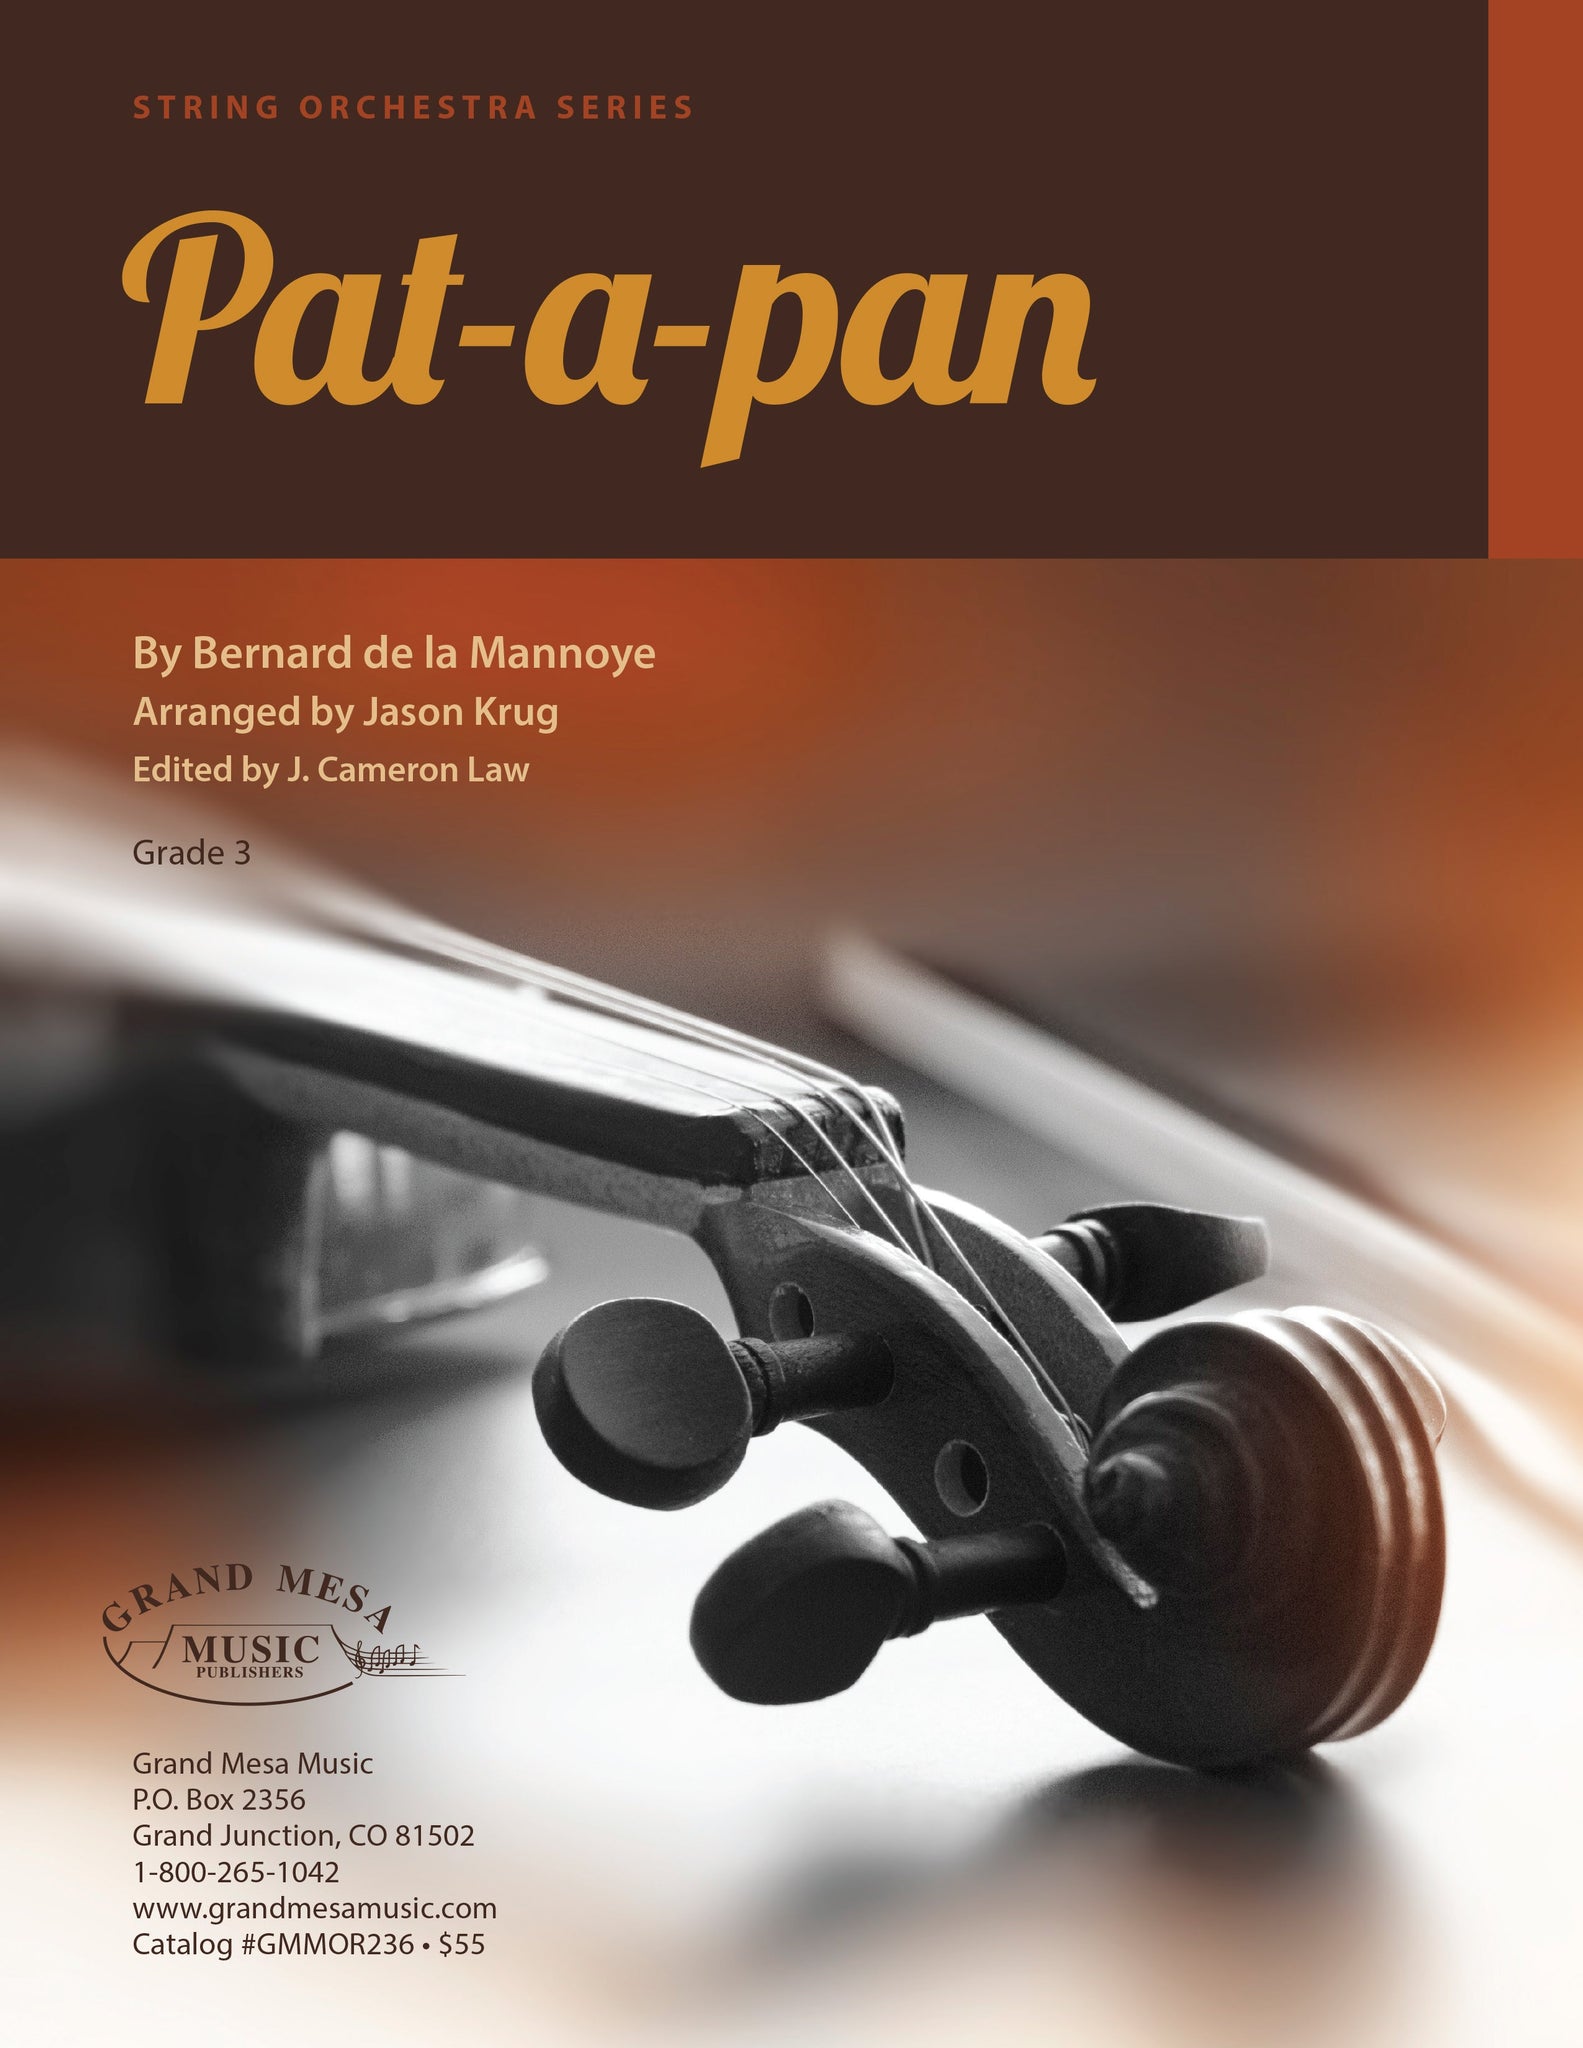 Strings sheet music cover of Pat-a-Pan, composed by Bernard de la Monnoye, arranged by Jason Krug.